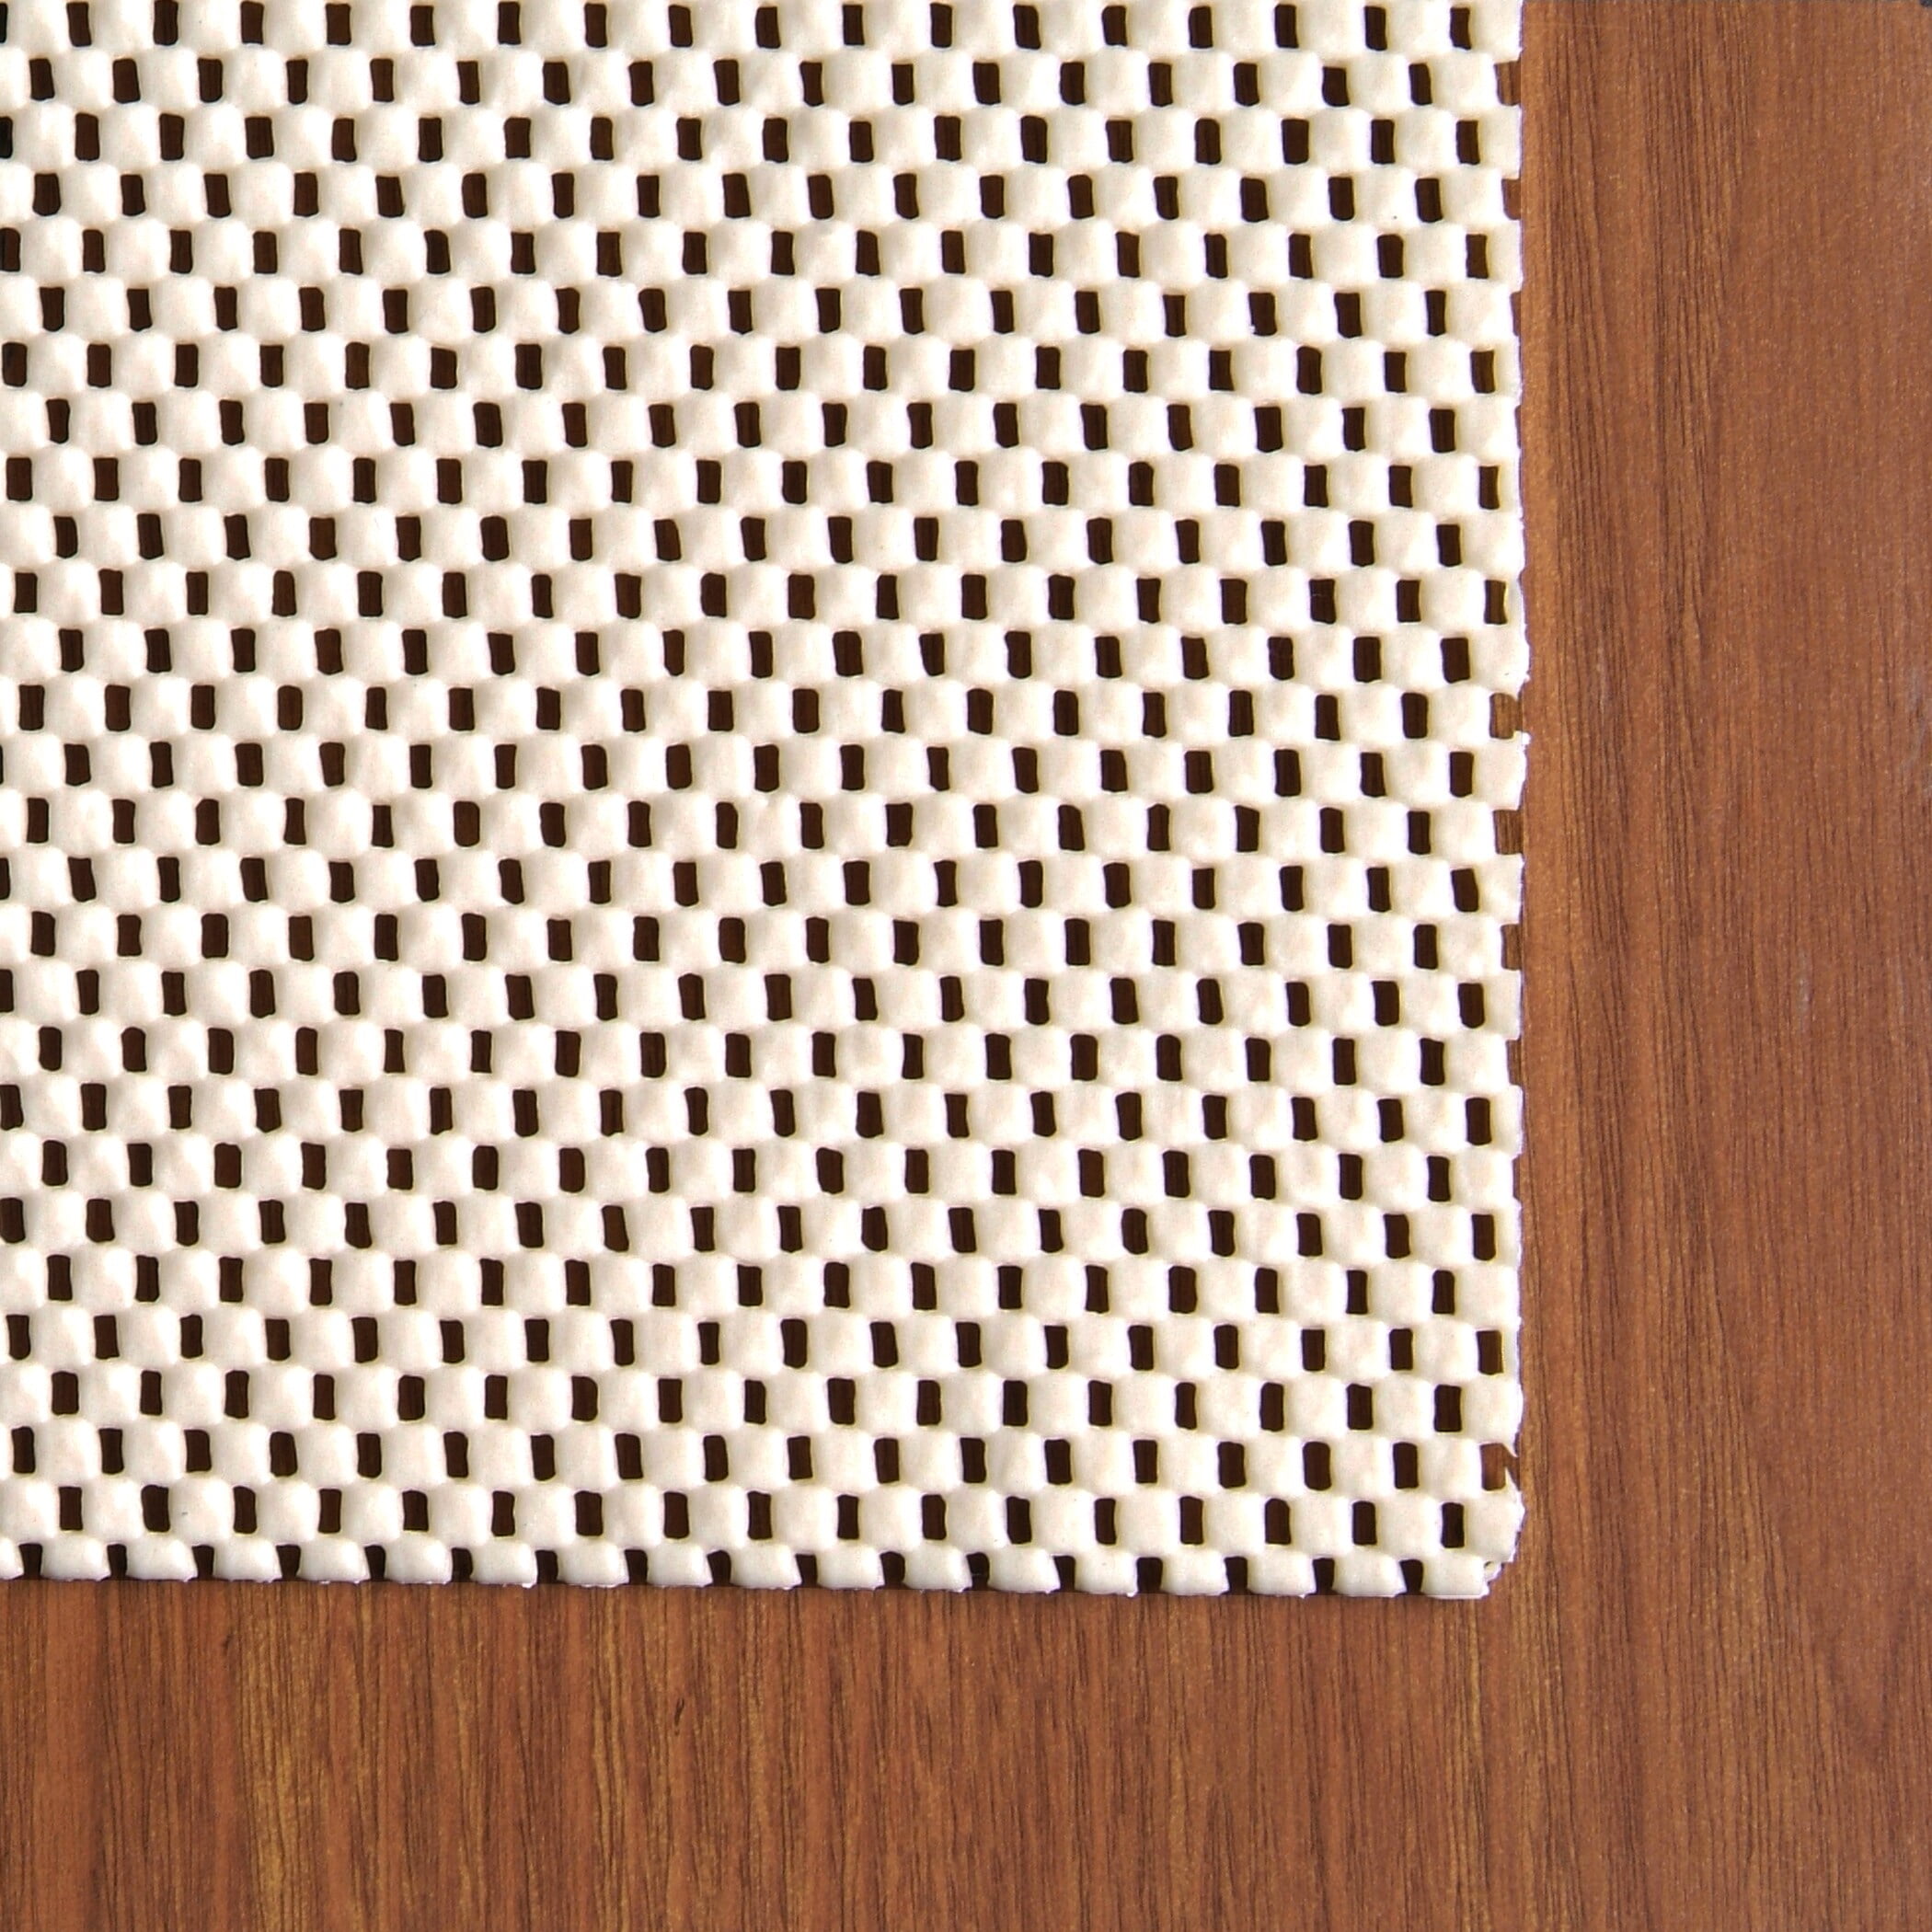 PVC anti-skid pad ECO-friendly mattress grip pad carpet rug pad underlay  shelf drawer grip liner dashboard anti-Slip Mat-white